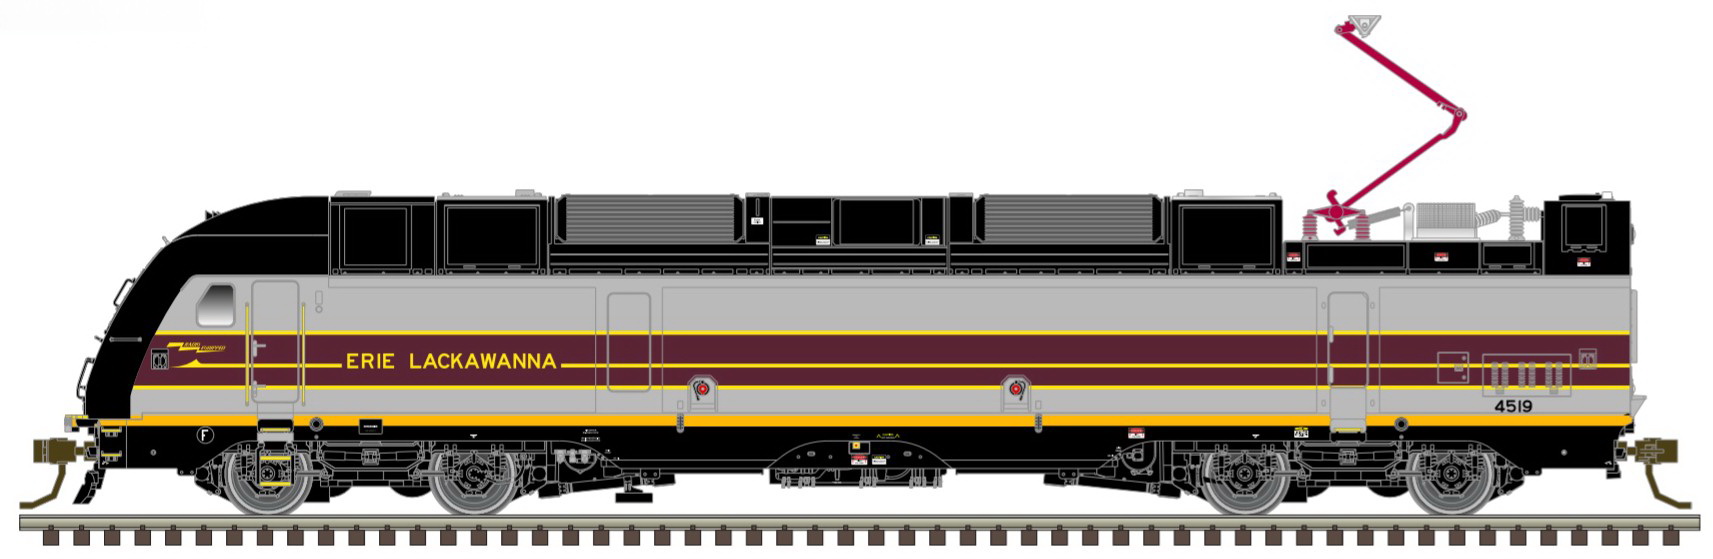 N Scale - Atlas - 40 004 858 - Locomotive, Dual-Mode, ALP-45DP - New Jersey Transit - 4519